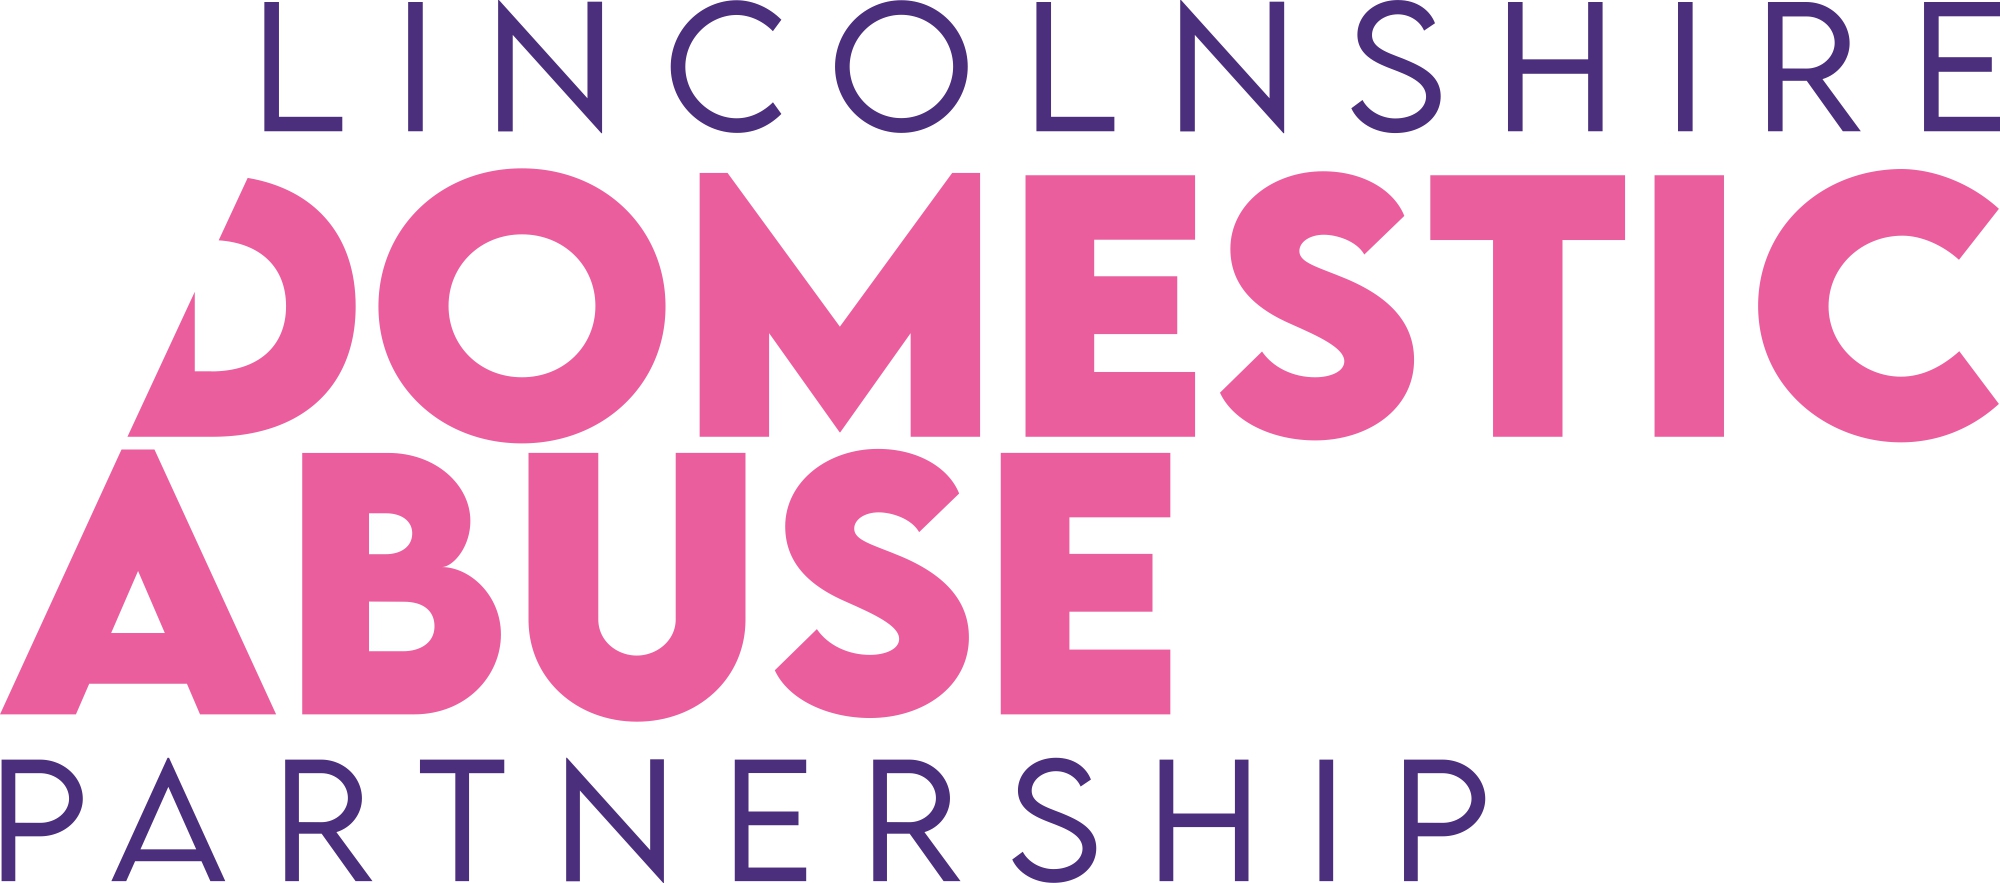 A logo reading Lincolnshire Domestic Abuse Partnership